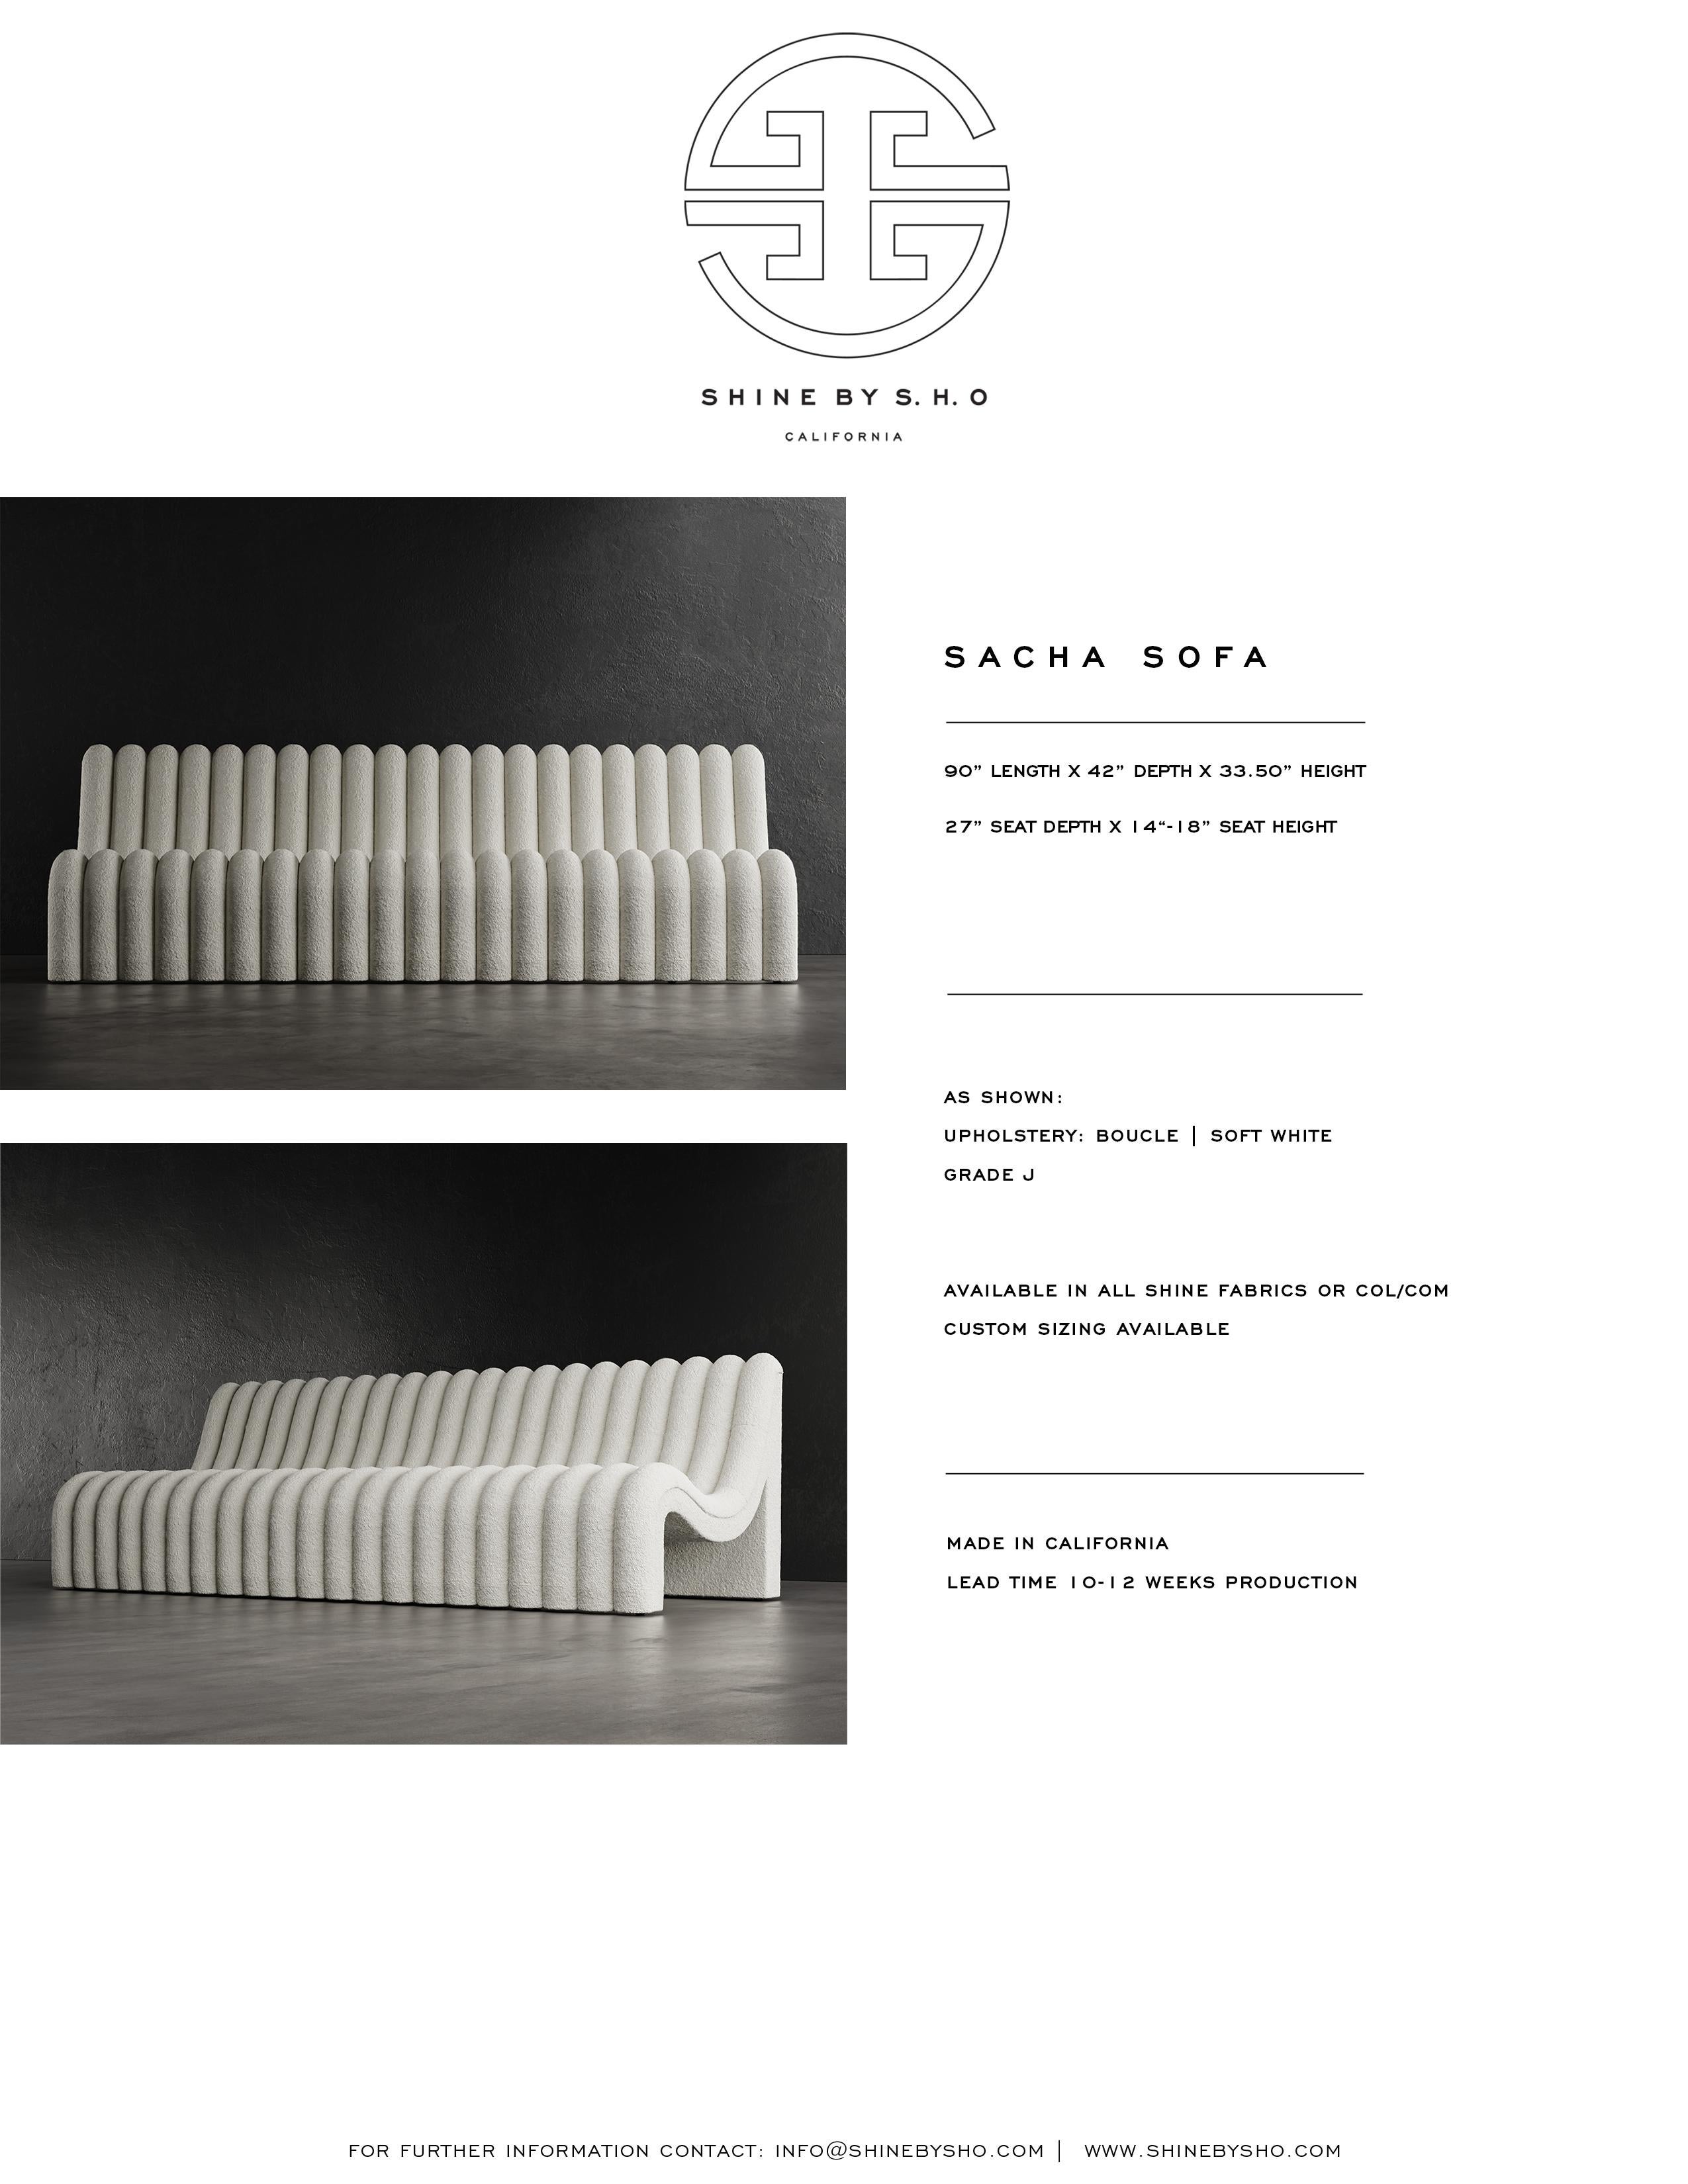 Upholstery Sacha Sofa - Modern Sofa in Soft White Bouclé For Sale